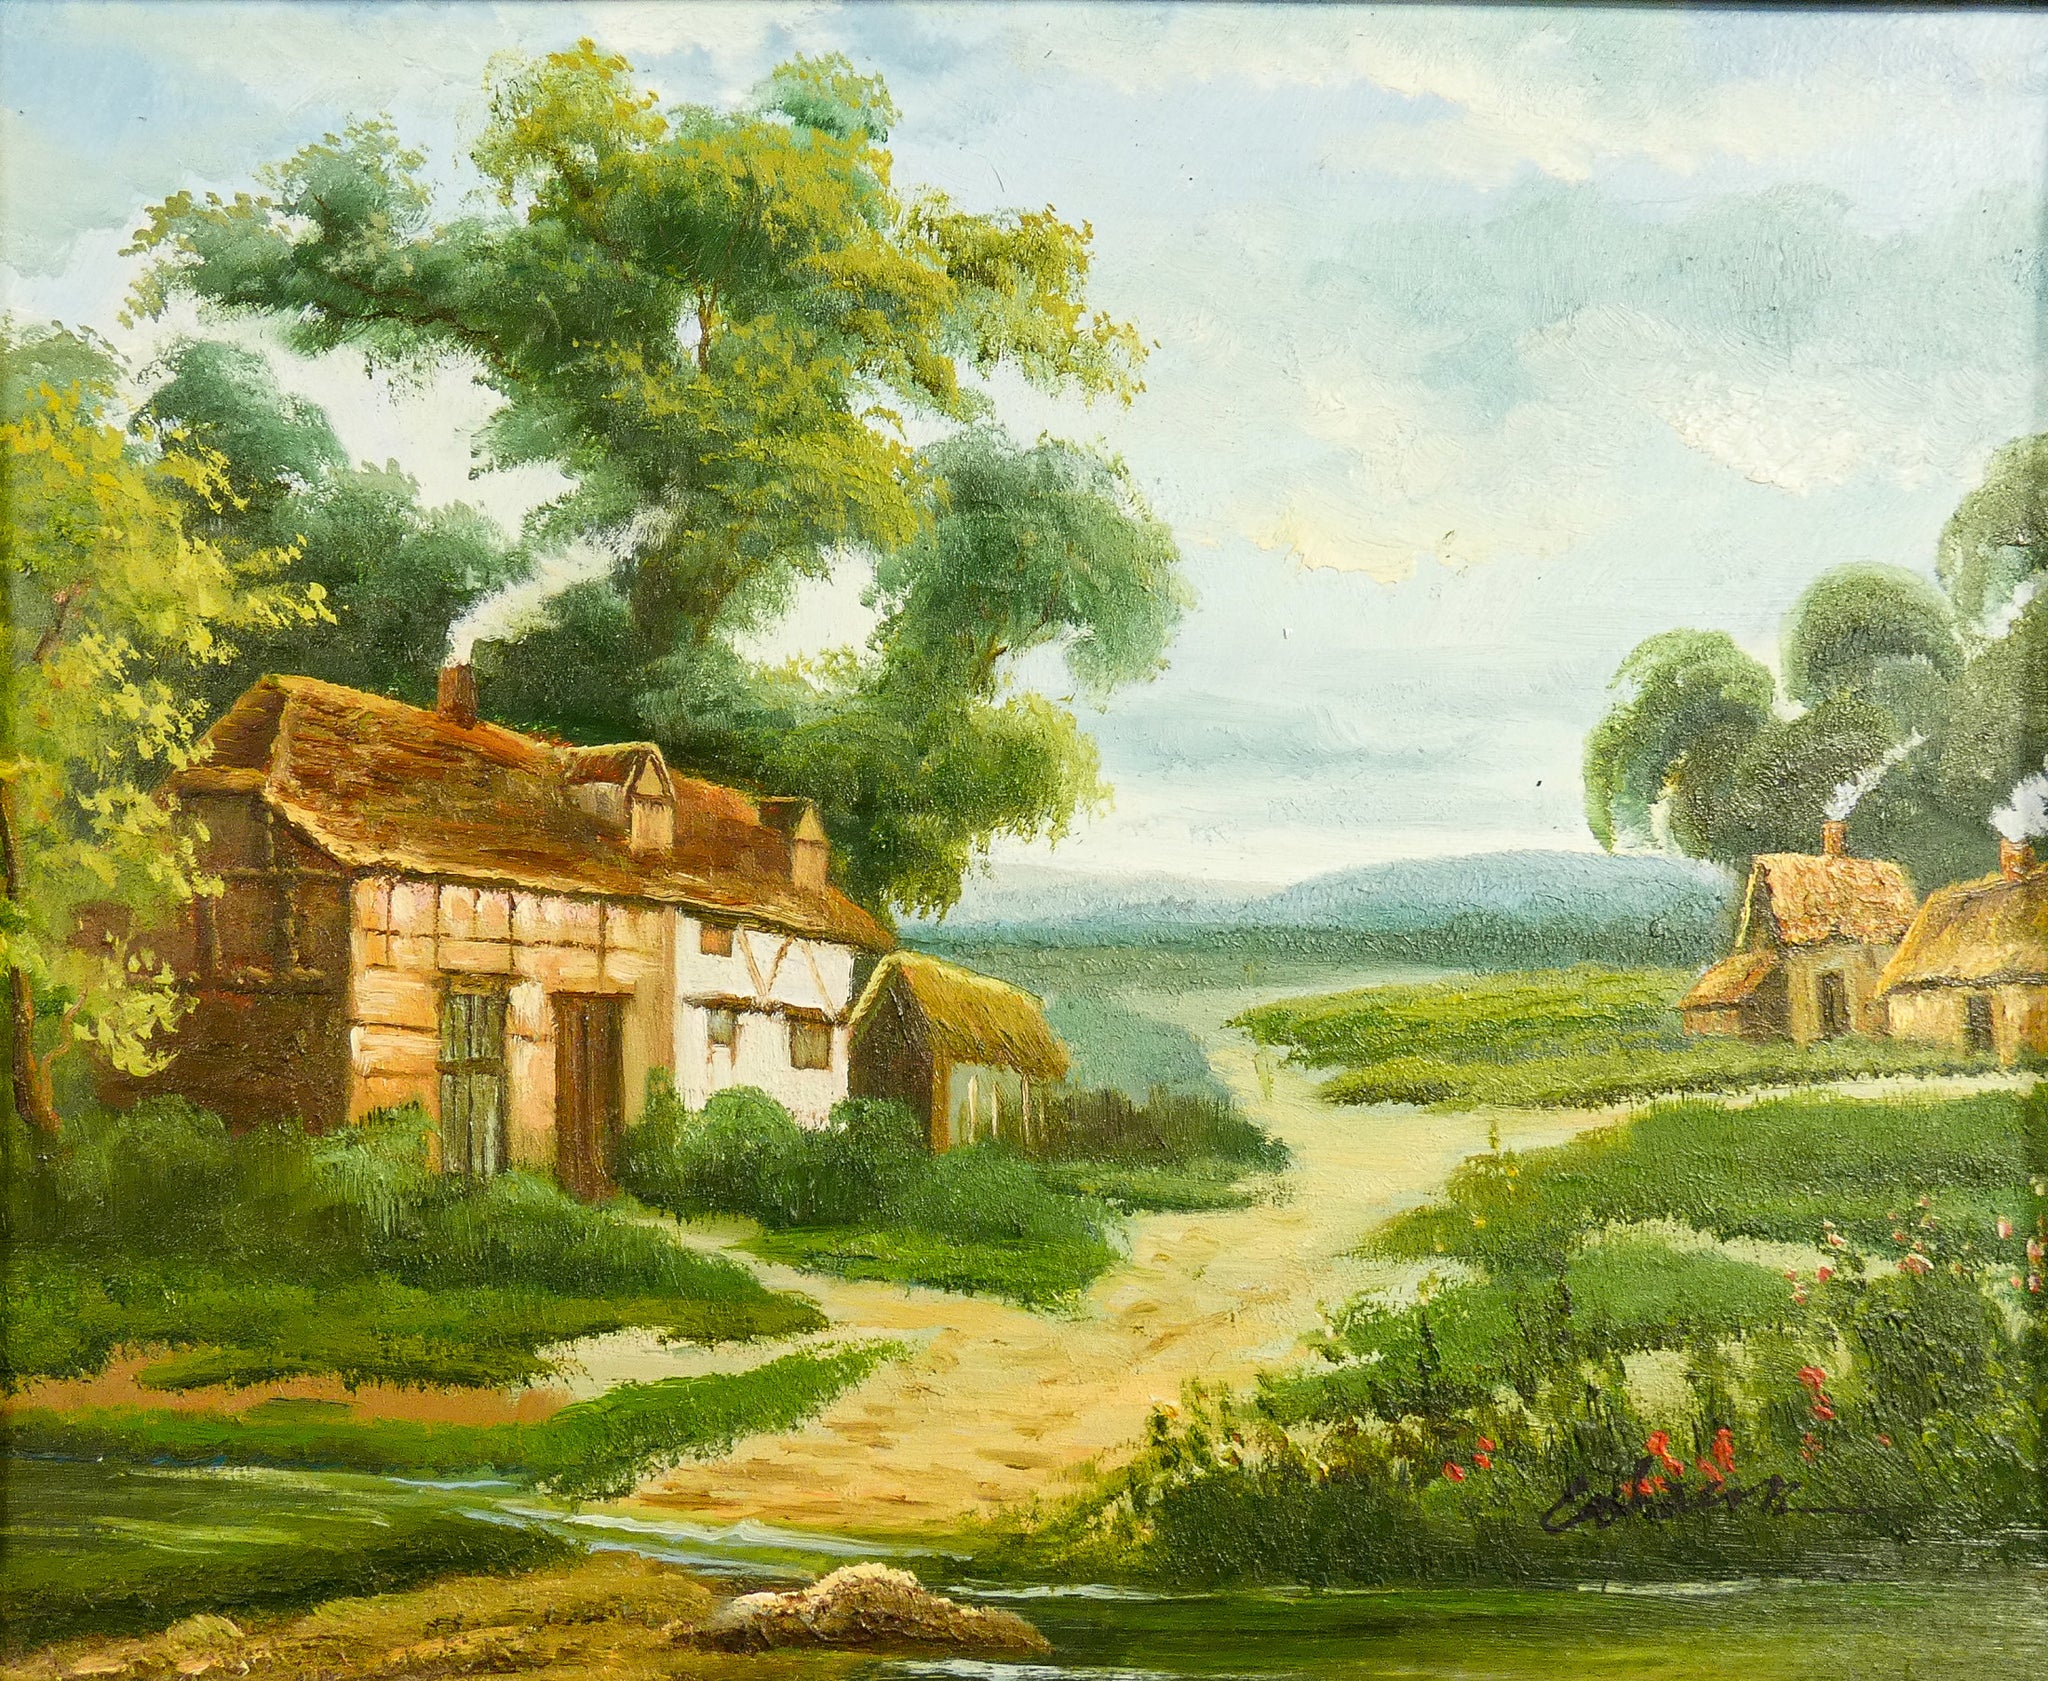 quadro paesaggio bosco dipinto olio tavola ricca cornice dorata epoca 1900